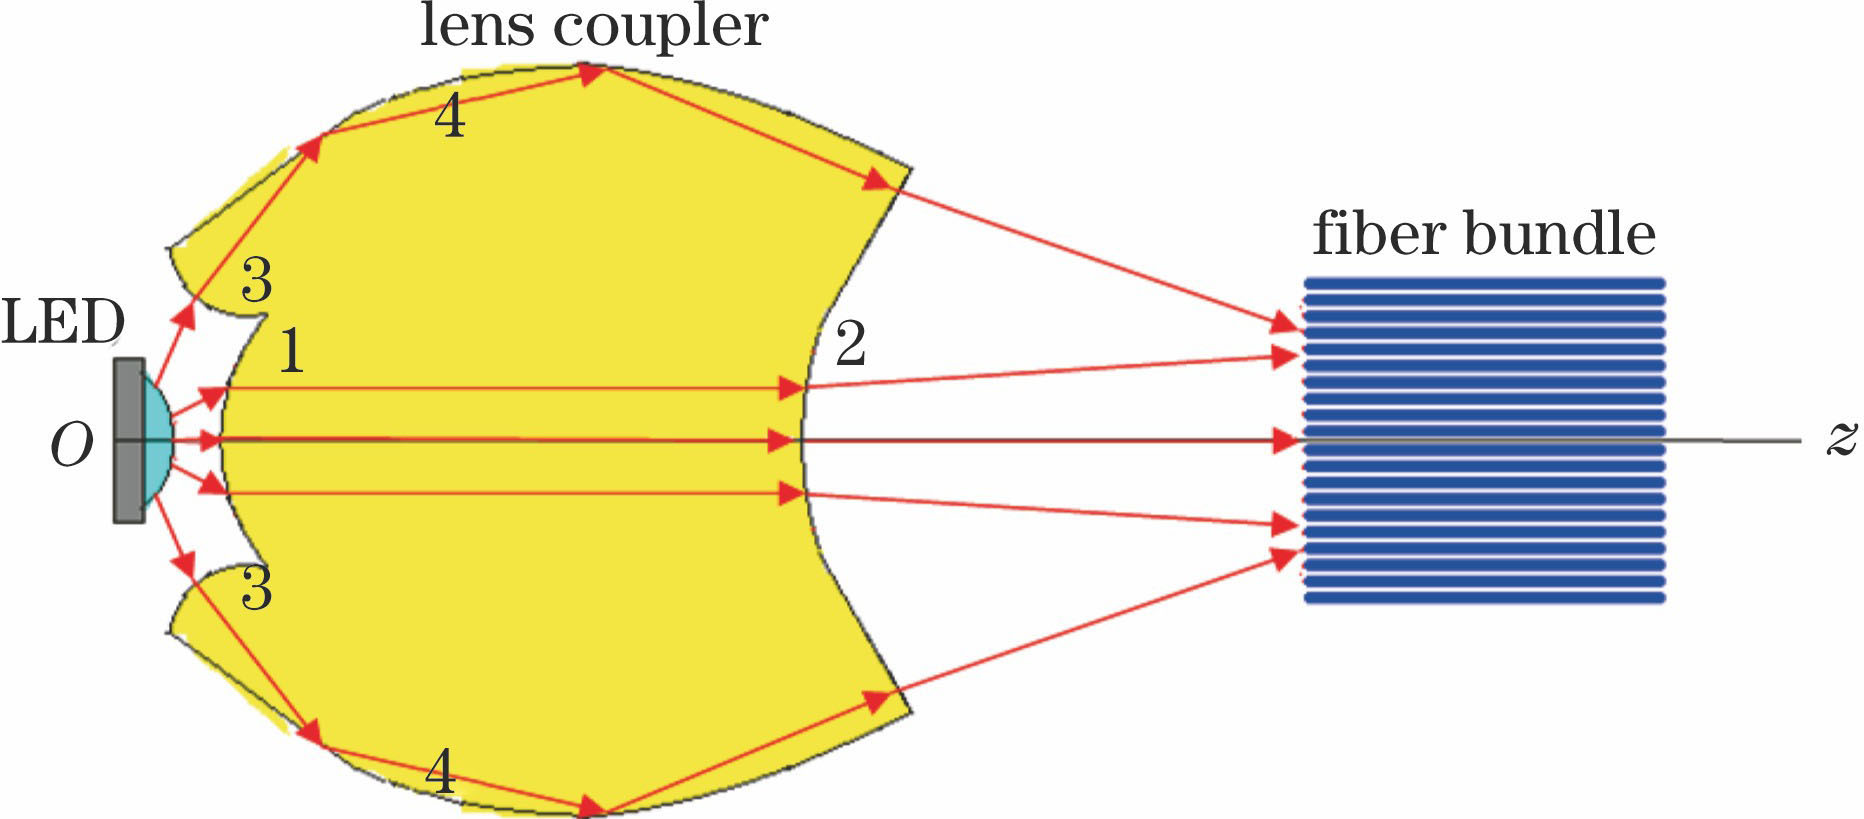 Principle diagram of lens coupler